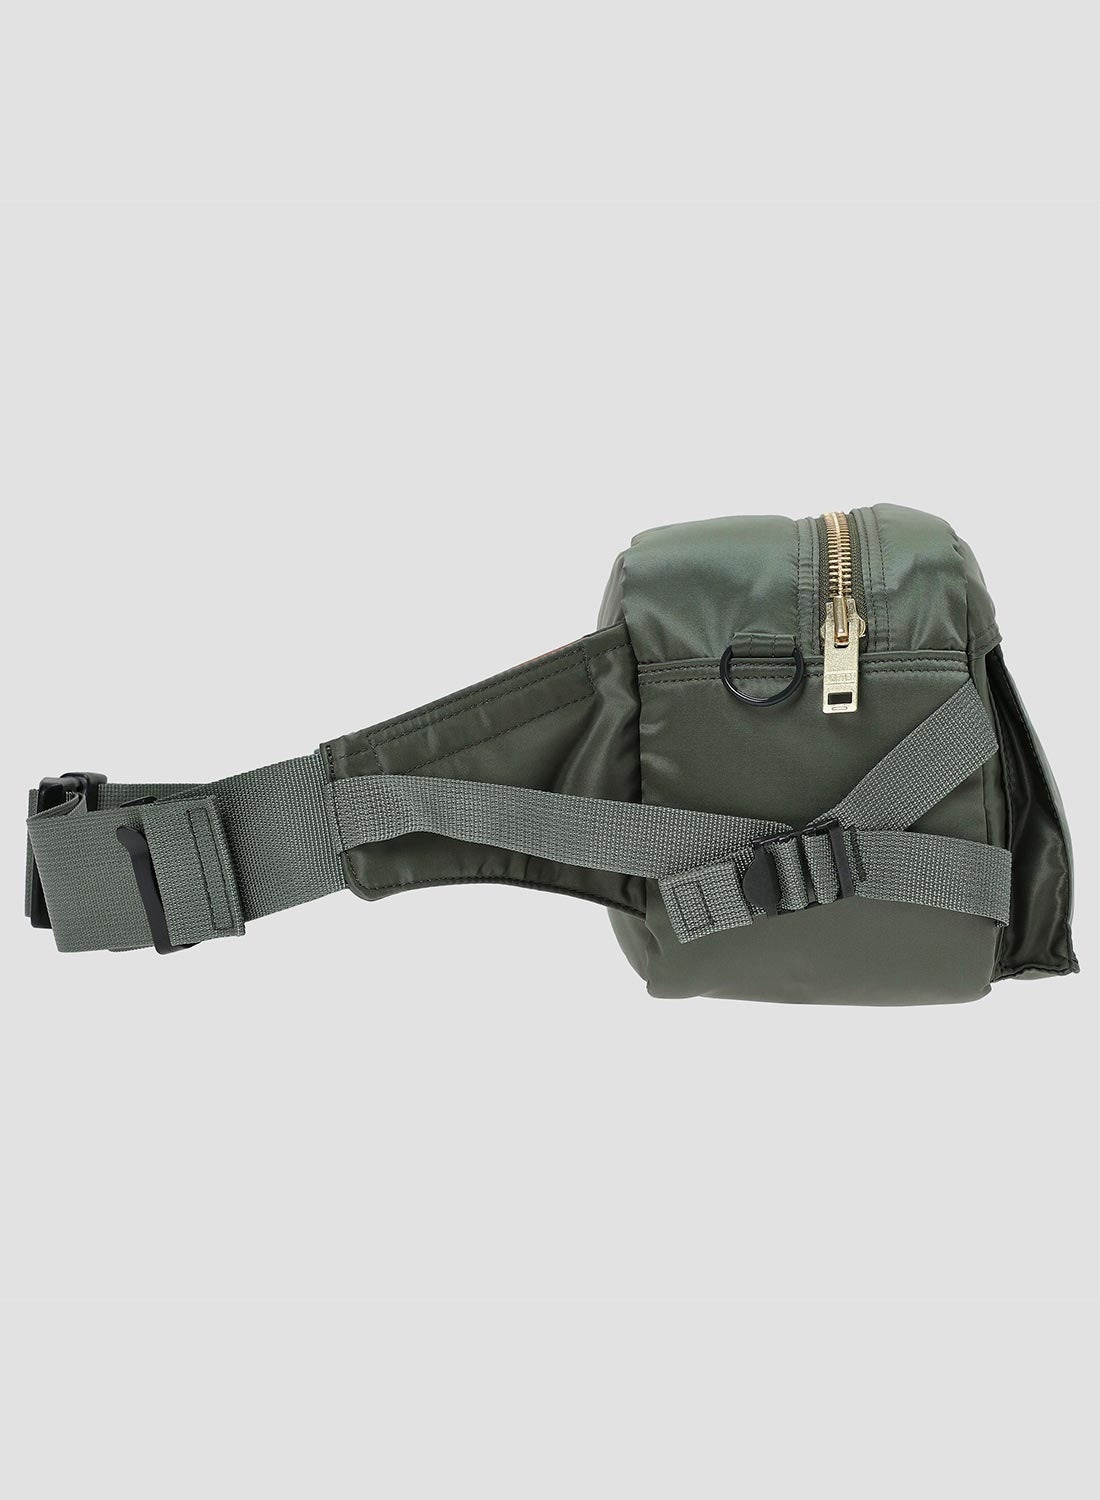 Porter-Yoshida & Co Tanker Waist Bag in Sage Green - 4